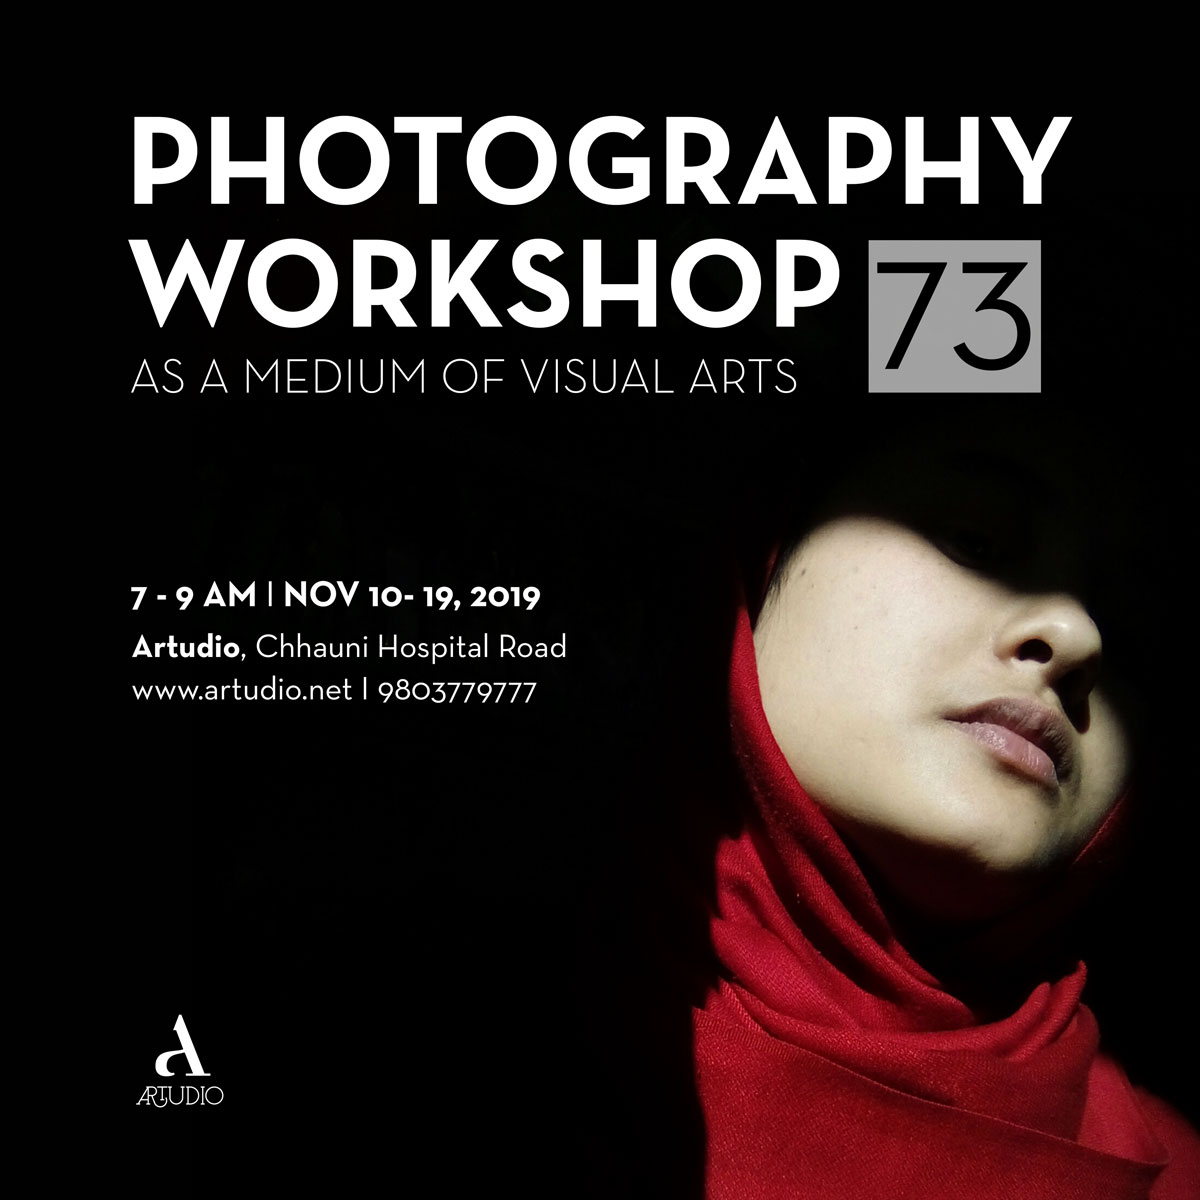 PHOTOGRAPHY WORKSHOP, AS A MEDIUM OF VISUAL ARTS (73rd Edition) post thumbnail image